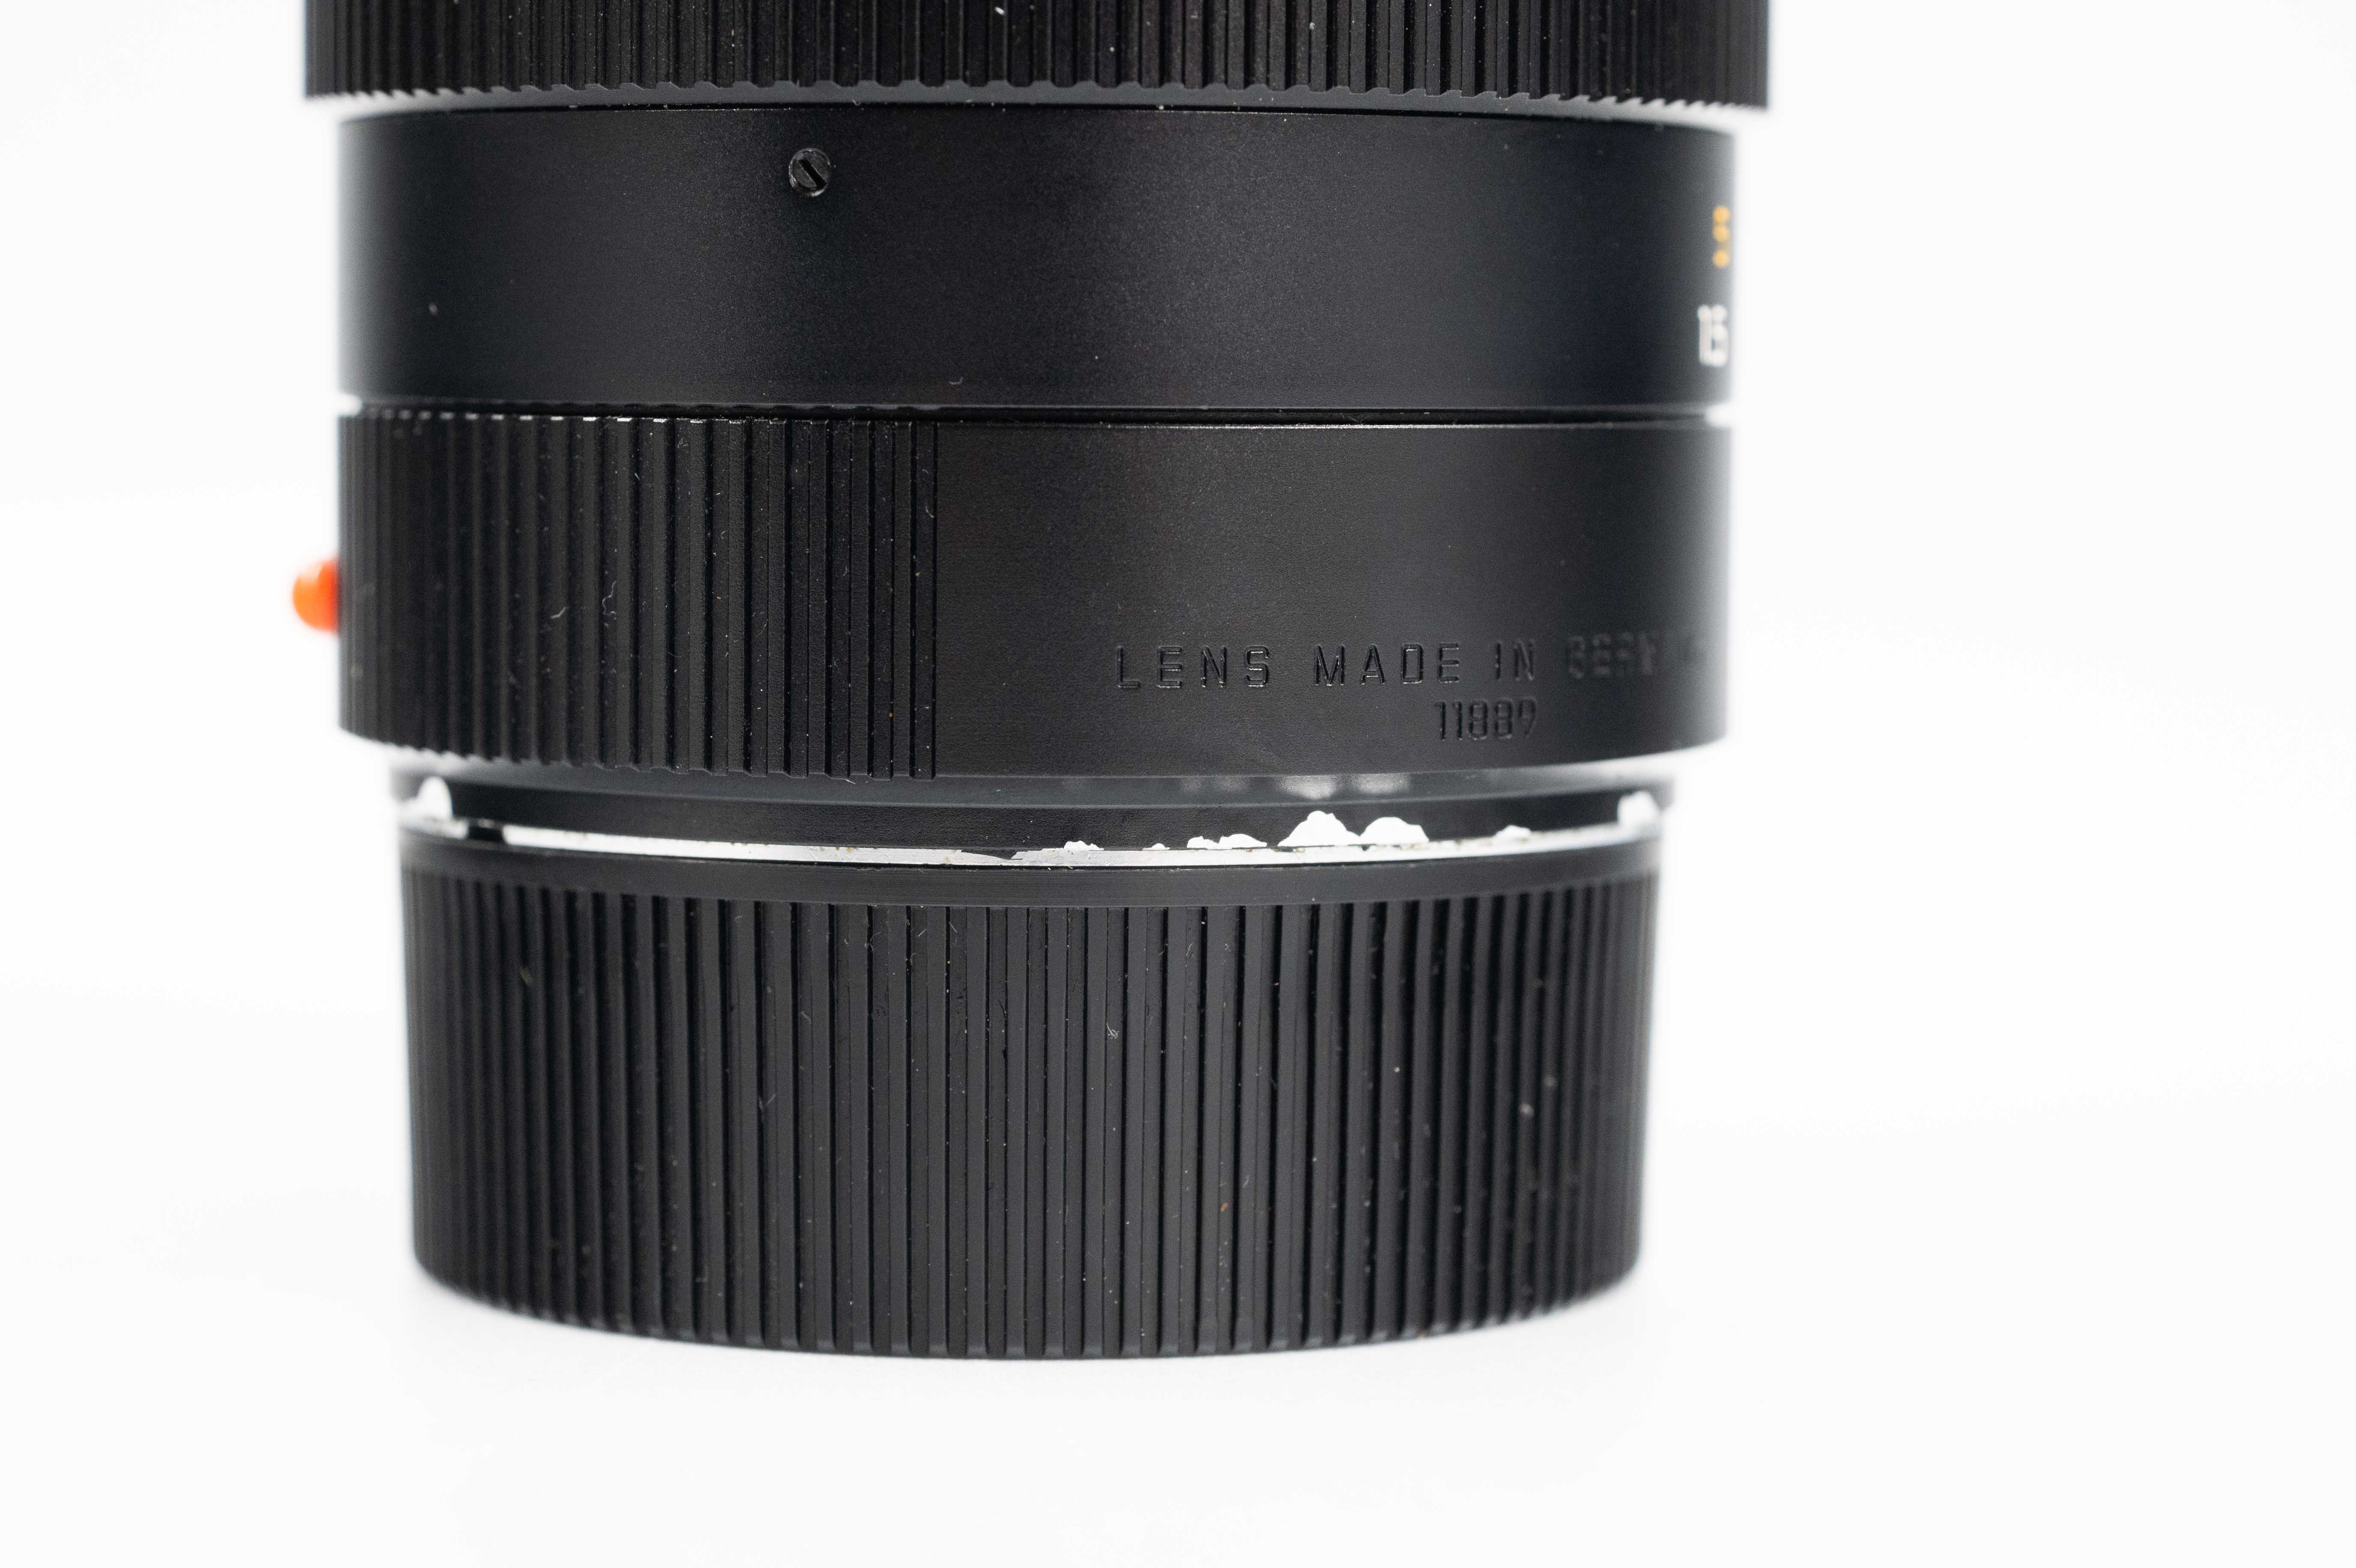 Leica APO-Telyt-M 135mm f/3.4 11889 | Leica Camera Classic